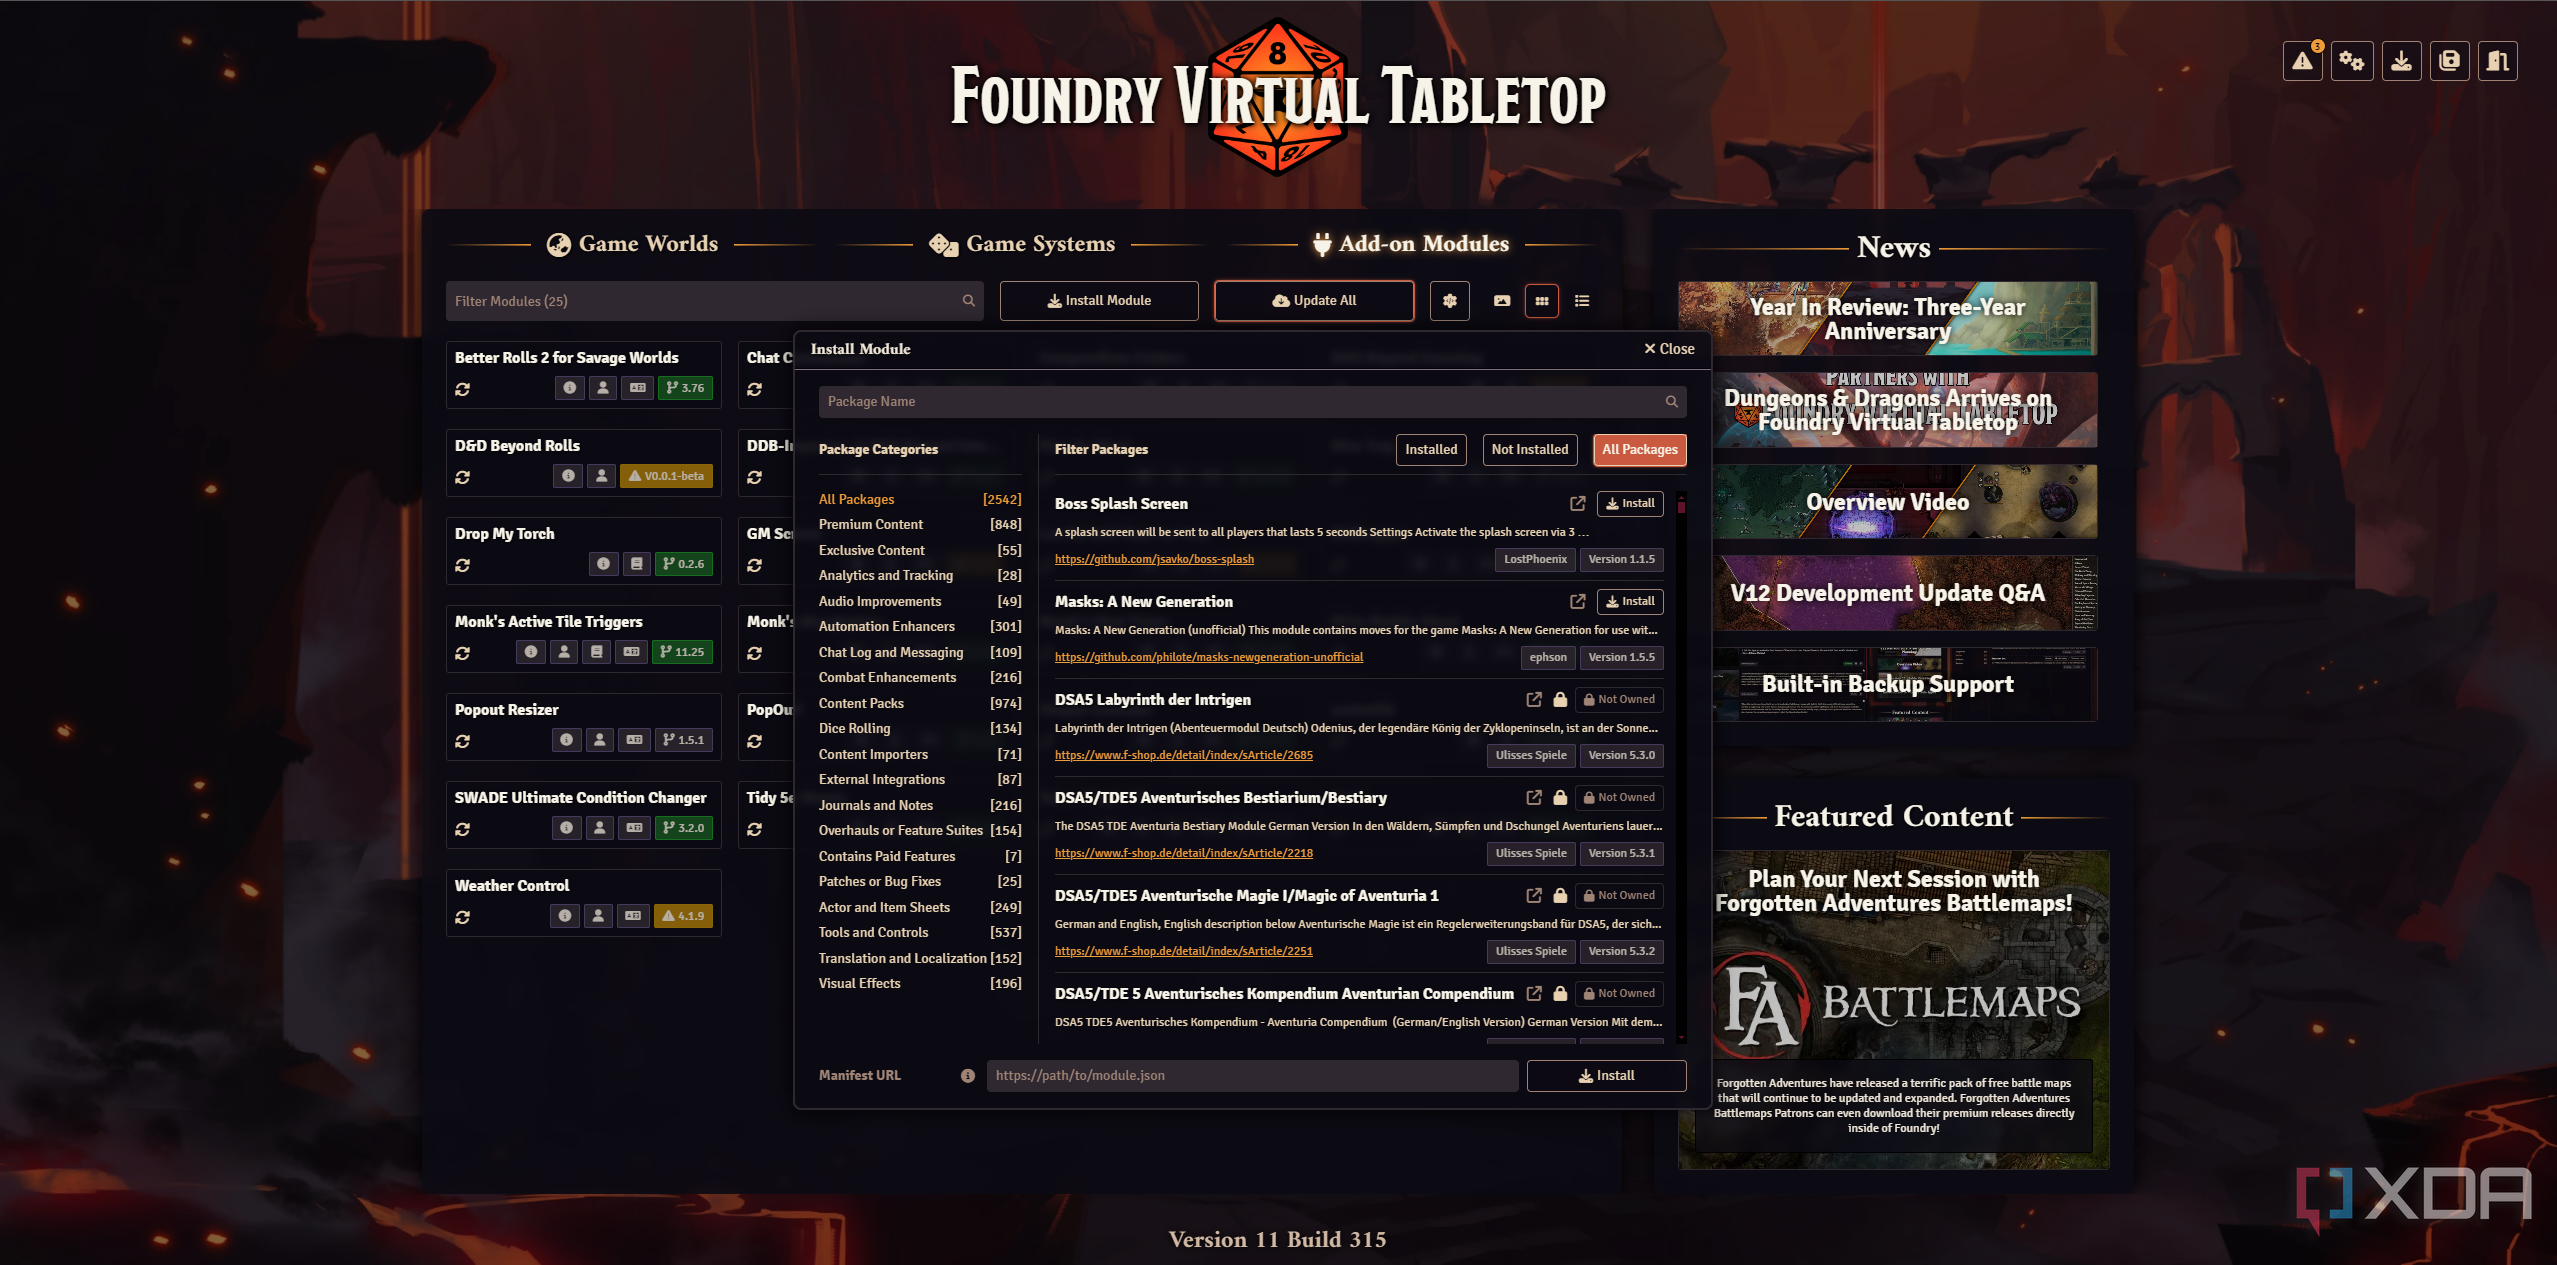 Список модулей для установки в Foundry Virtual Tabletop